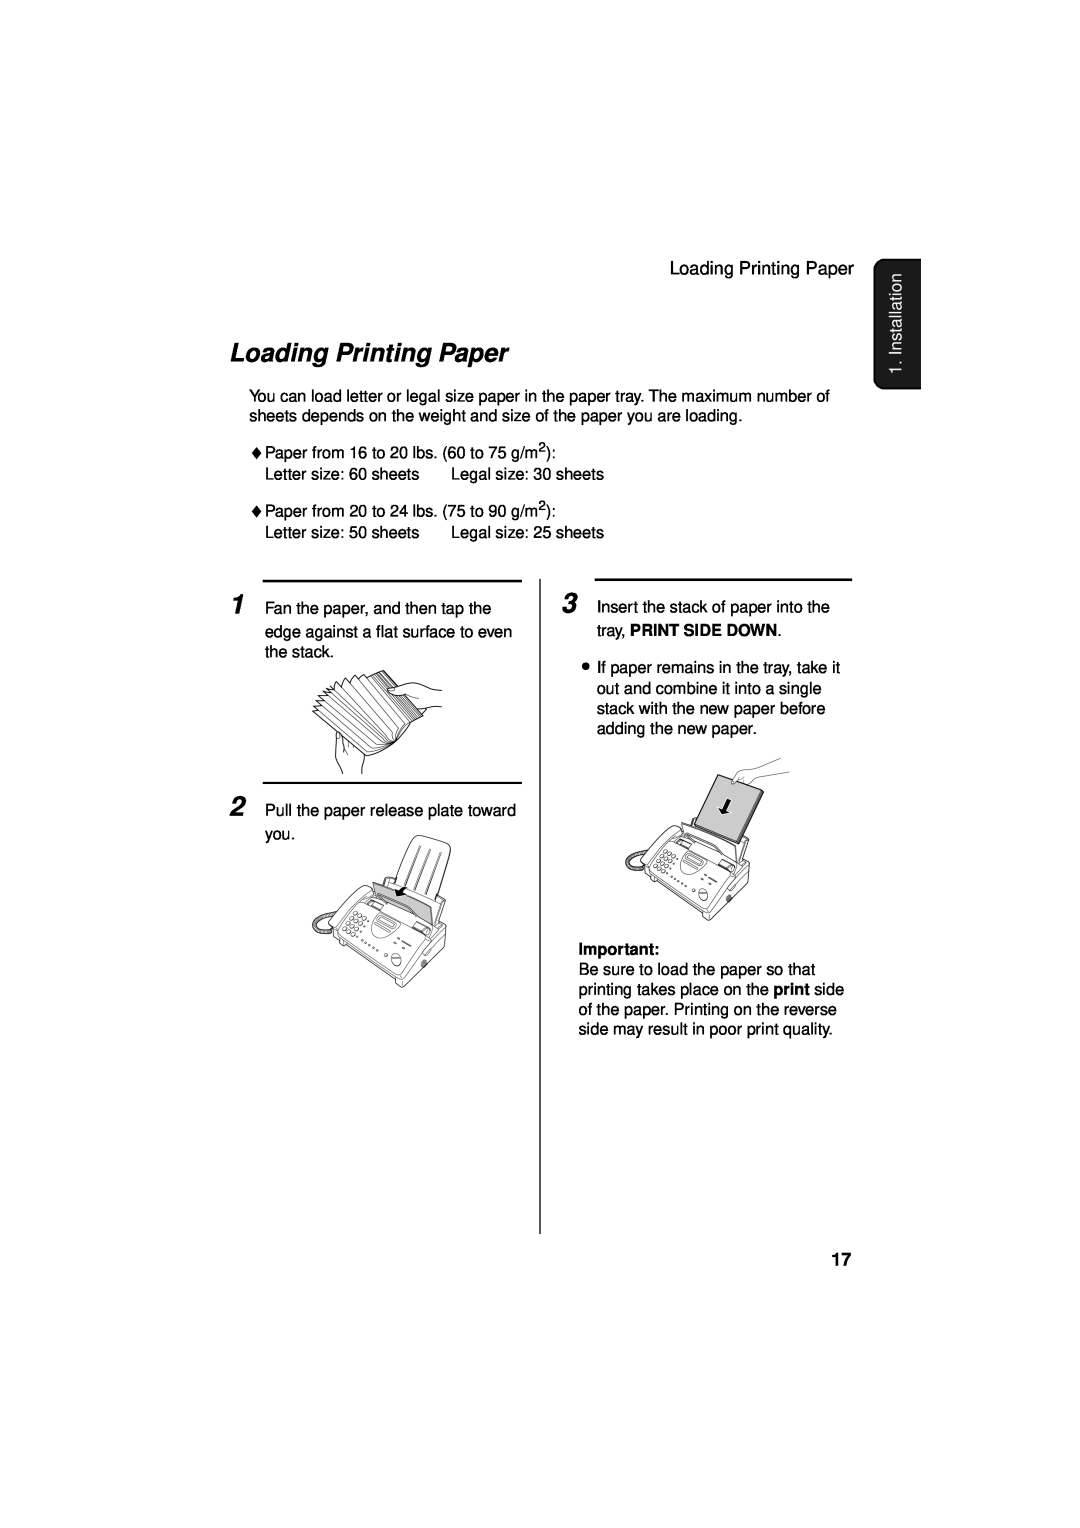 Sharp UX-340LM manual Loading Printing Paper, Installation 